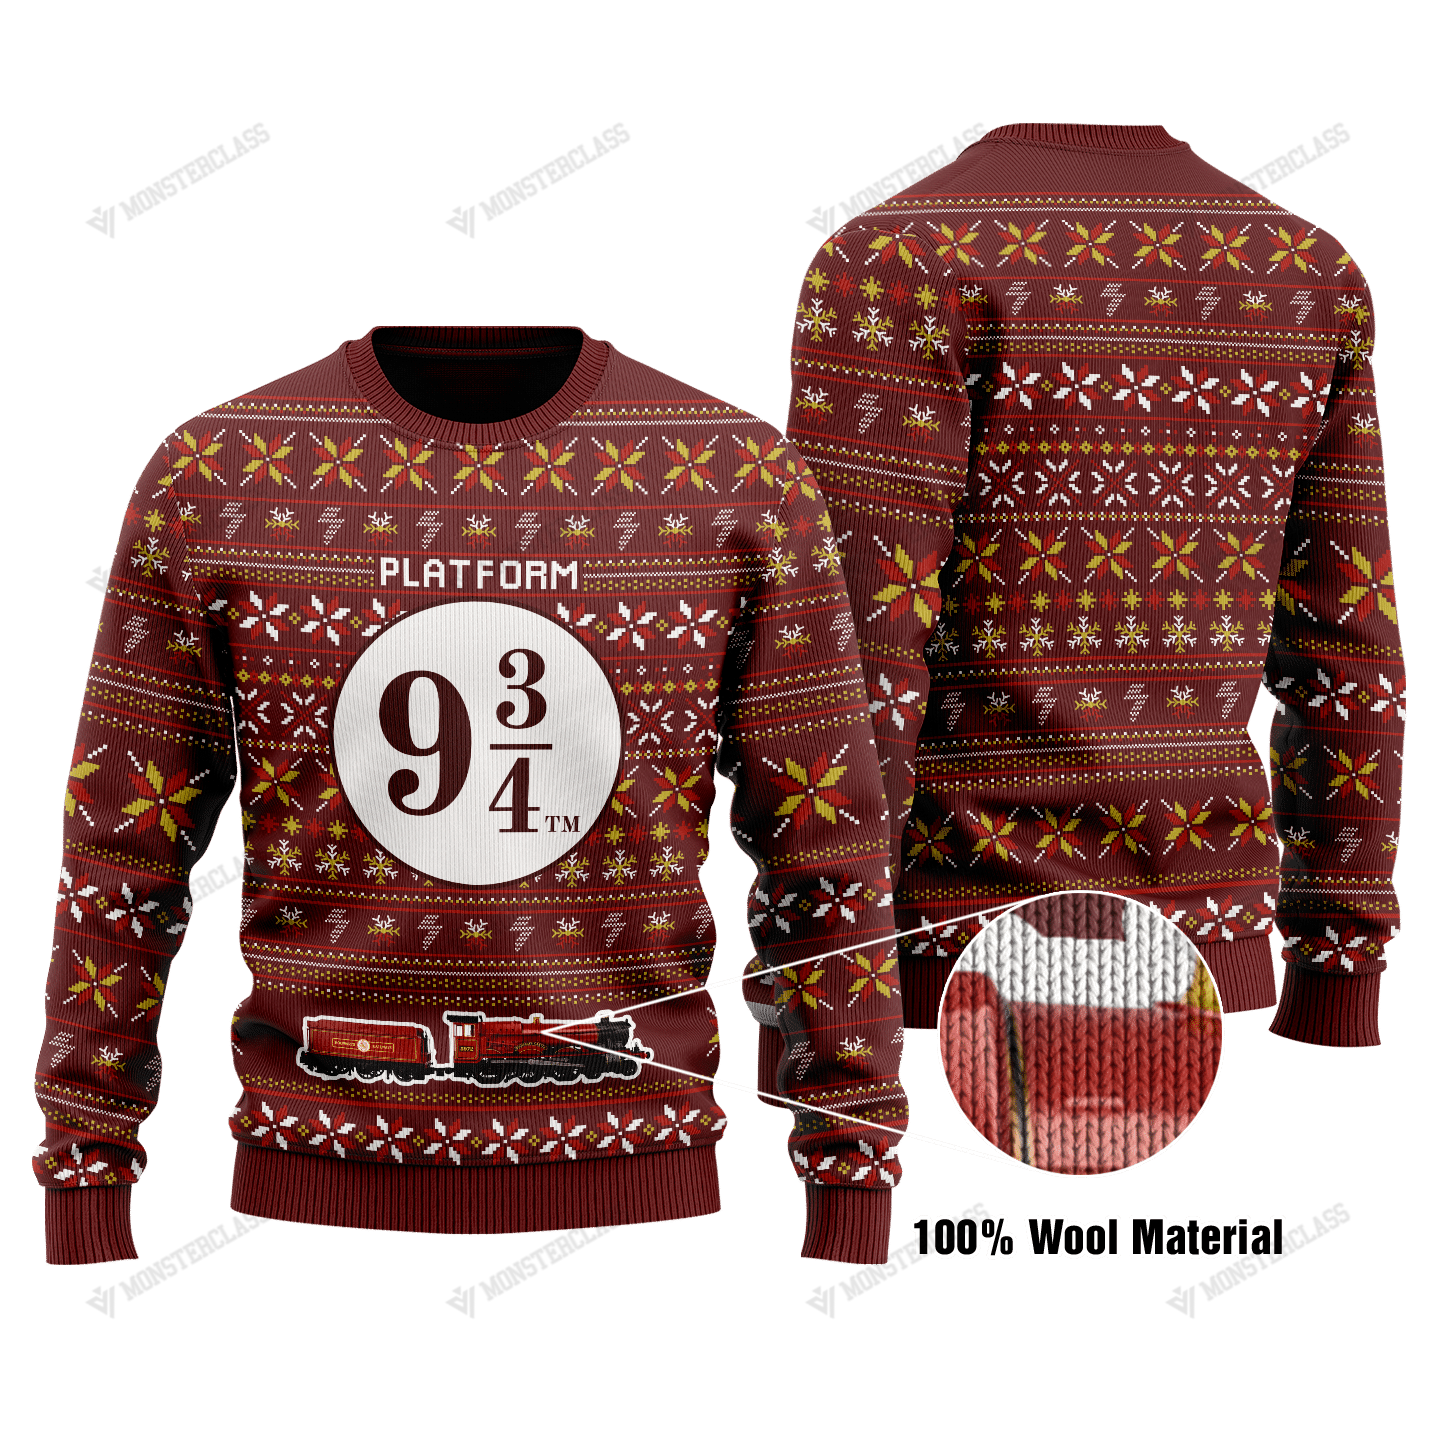 Harry Potter Platform 9 3/4 christmas sweater